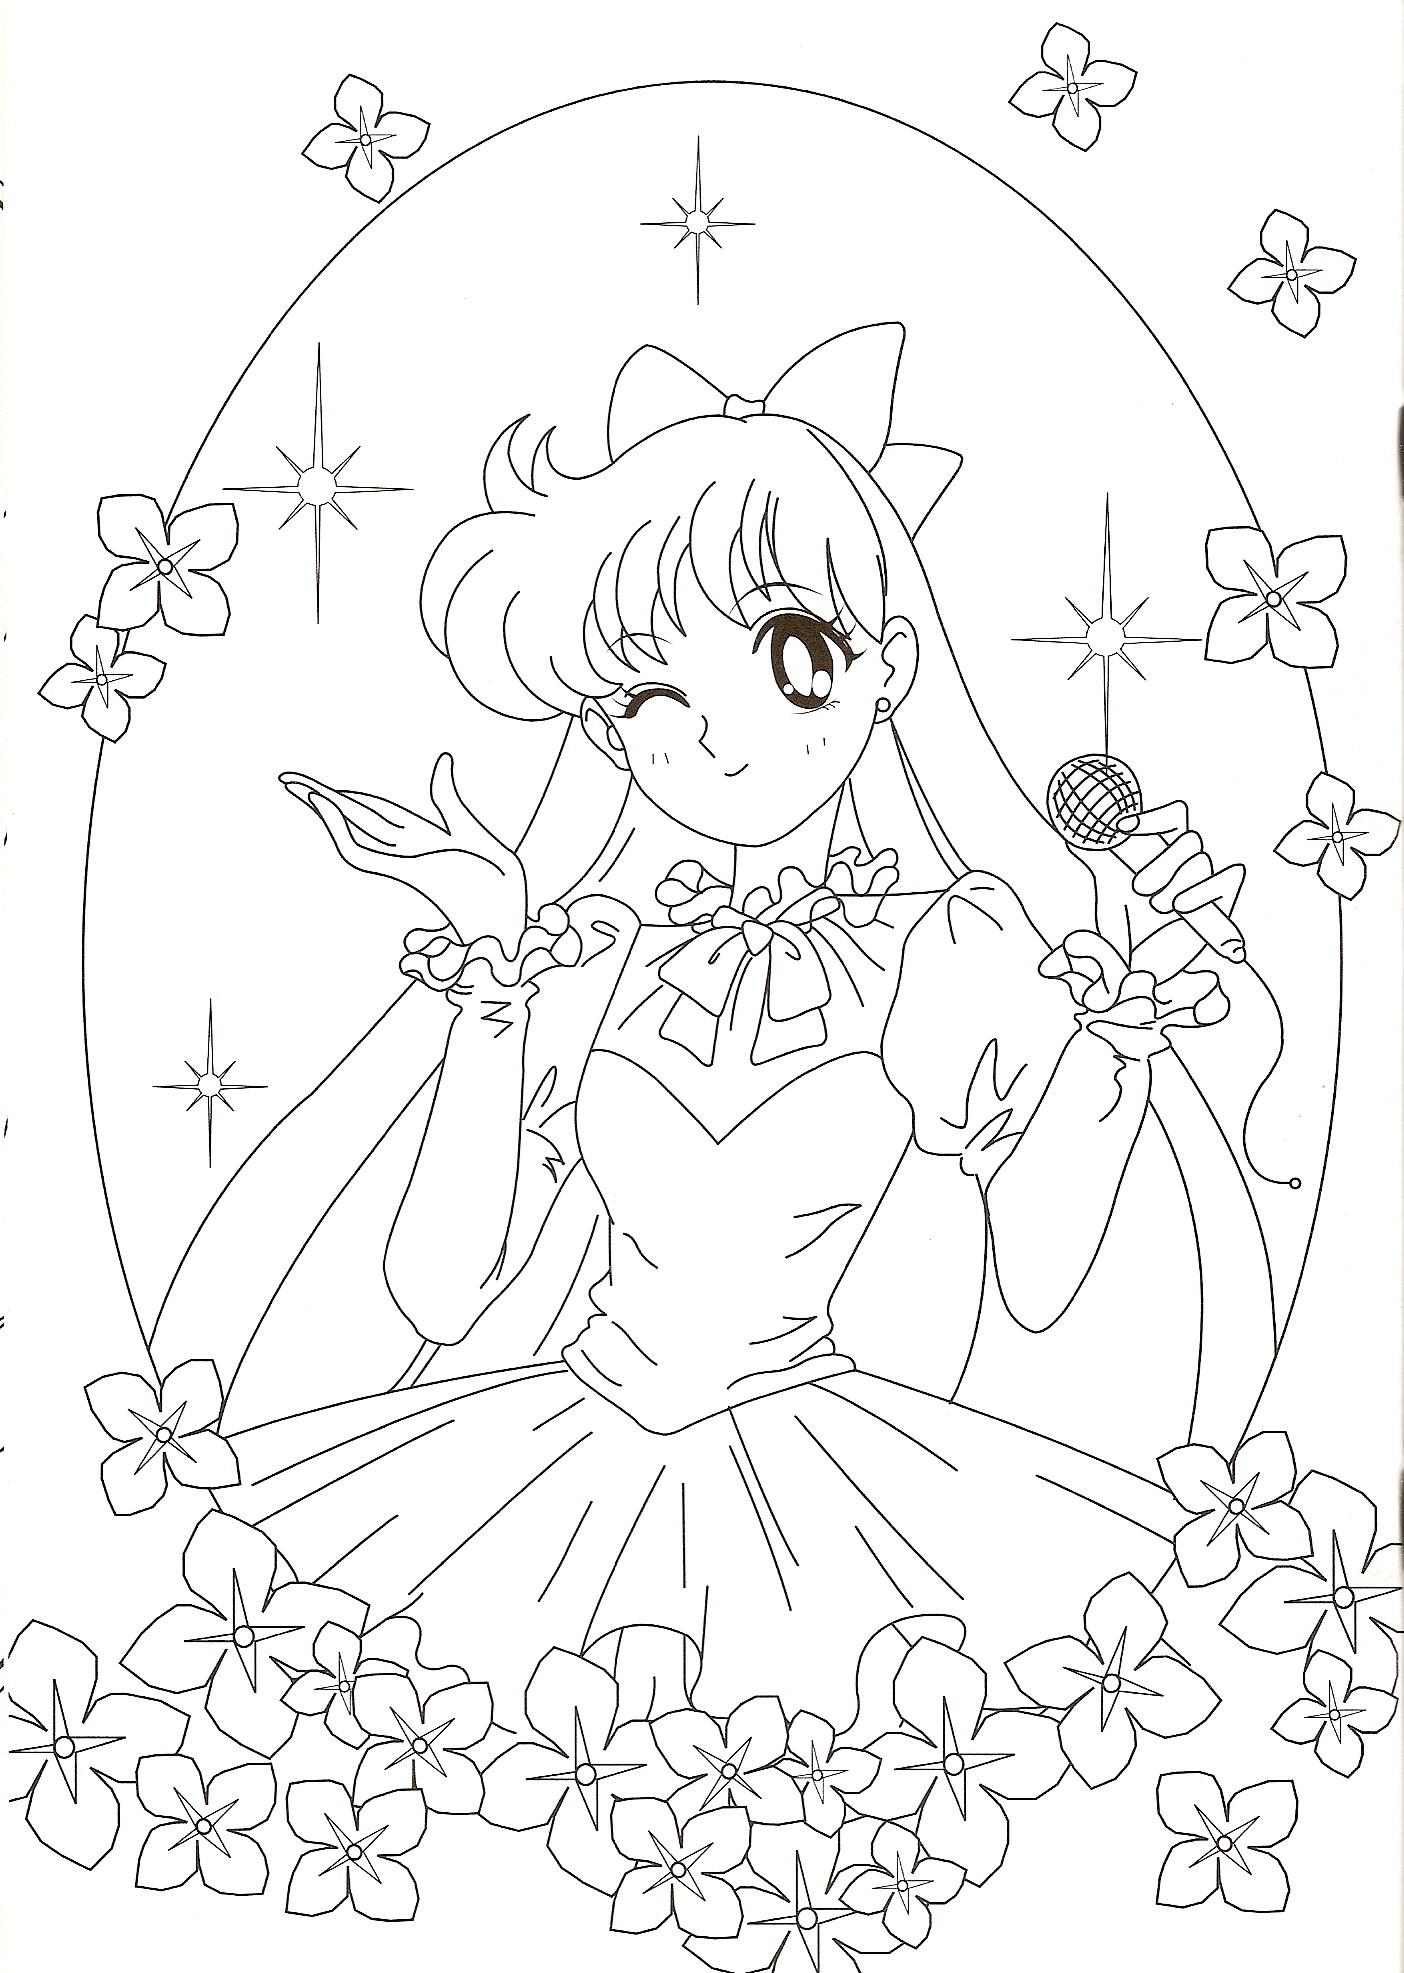 Sailor_Moon_coloring_book7_012.jpg